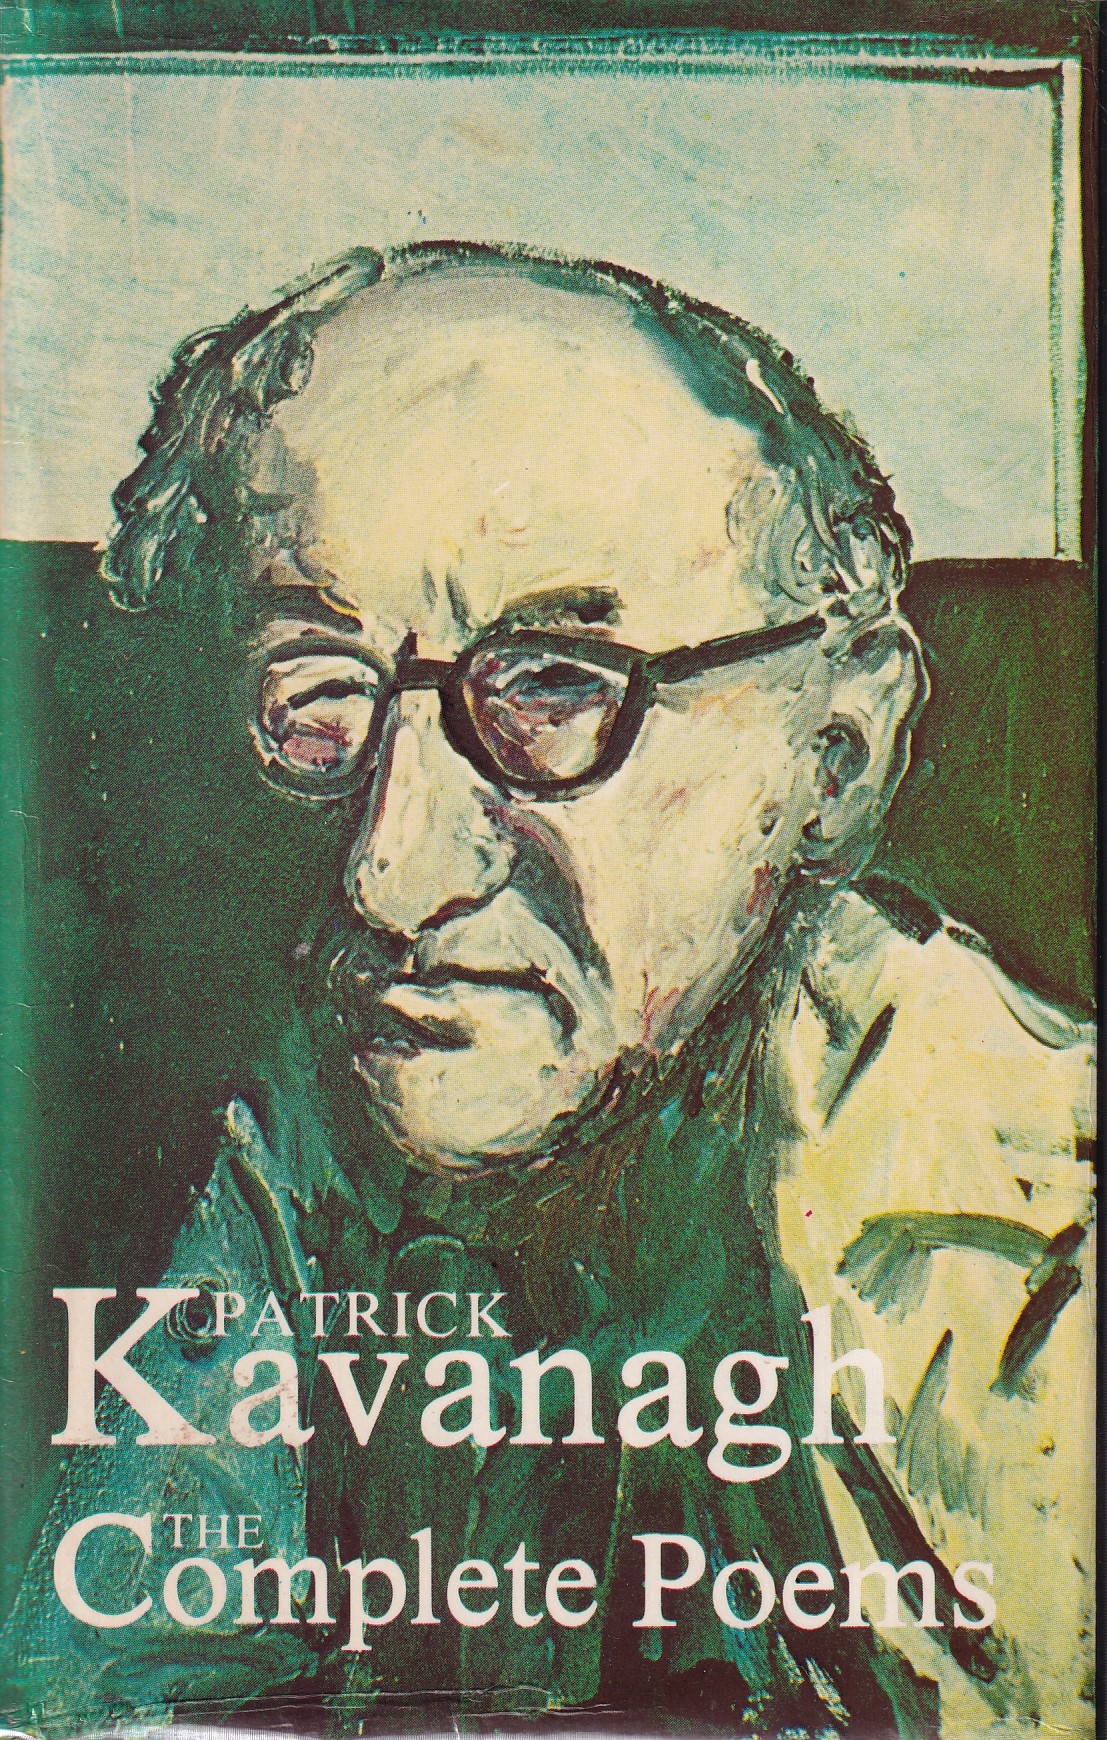 Patrick Kavanagh: The Compete Poems | Patrick Kavanagh | Charlie Byrne's